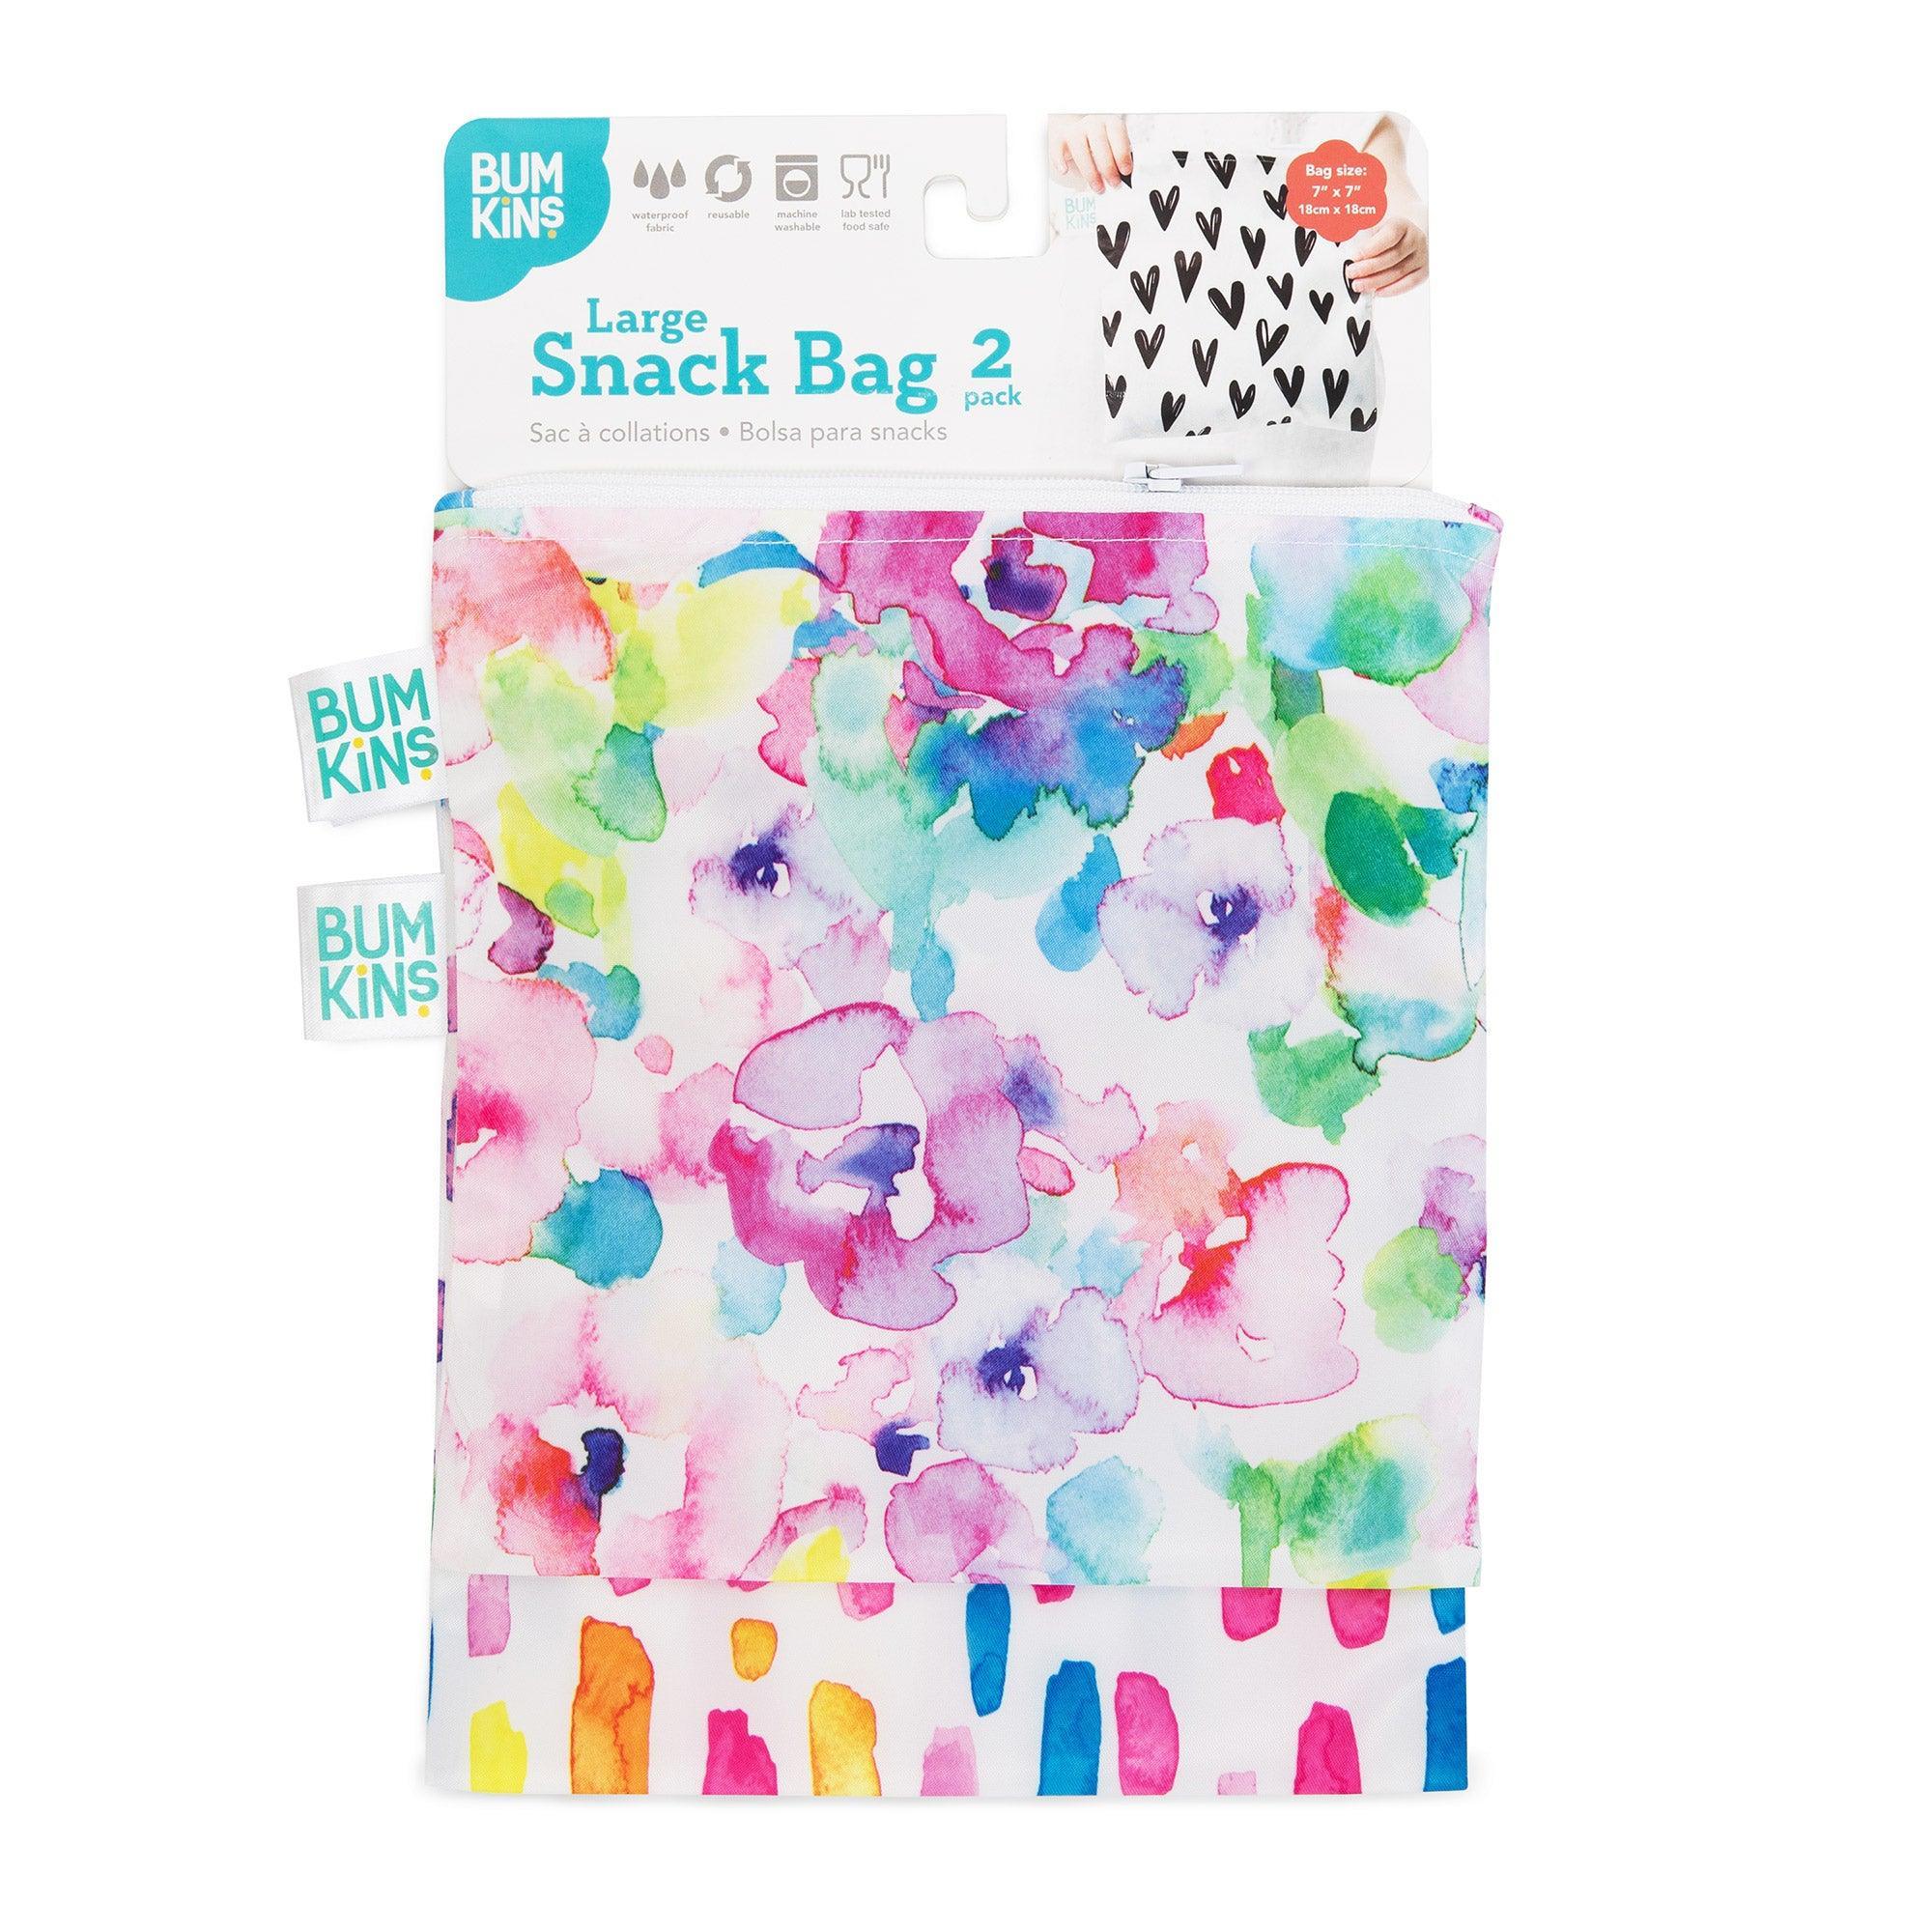 Reusable Snack Bag, Large 2-Pack: Watercolor & Brush Strokes - Bumkins